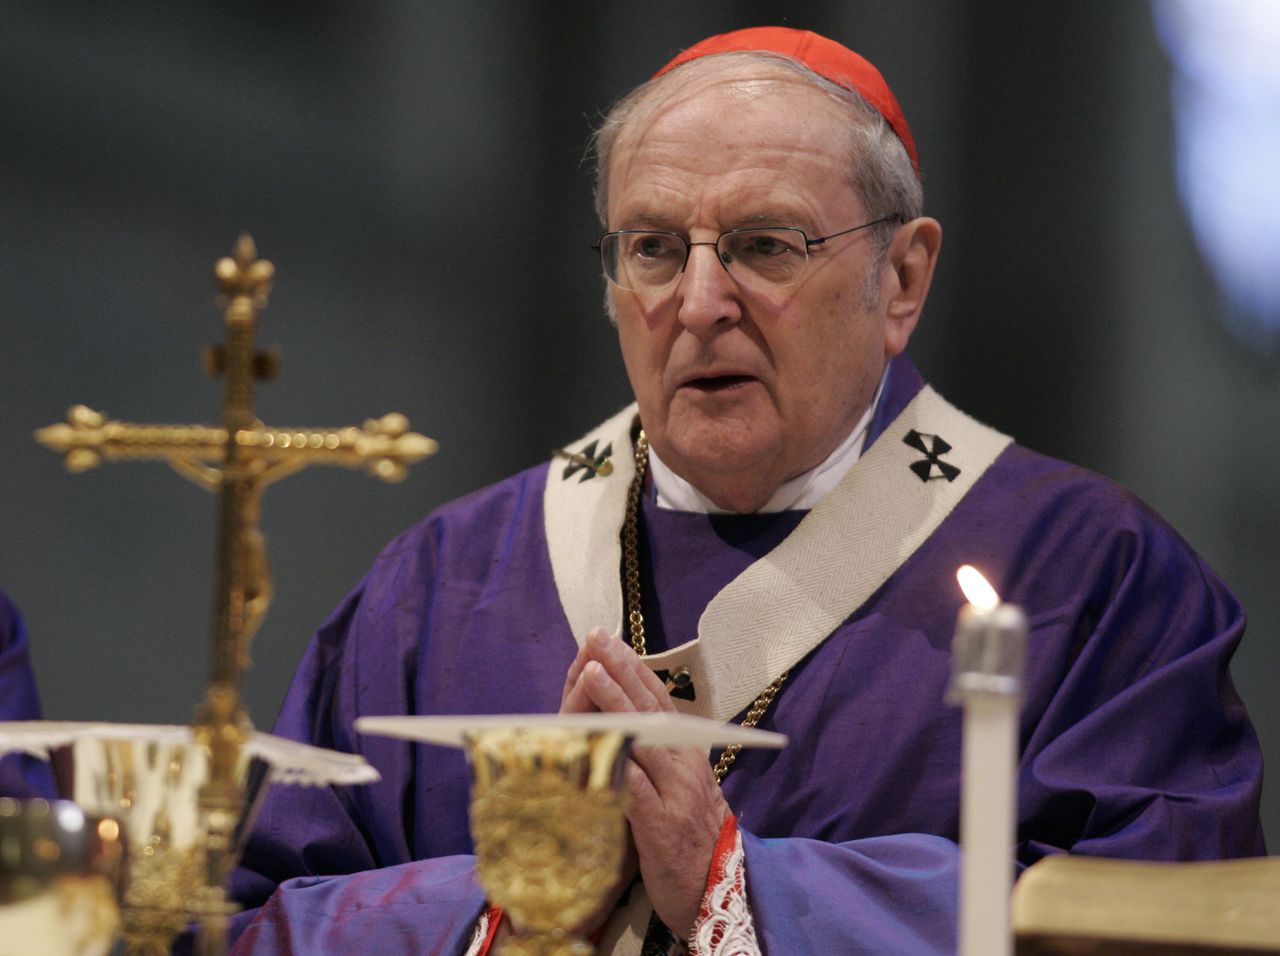 Omstreden Duitse kardinaal Meisner overleden 